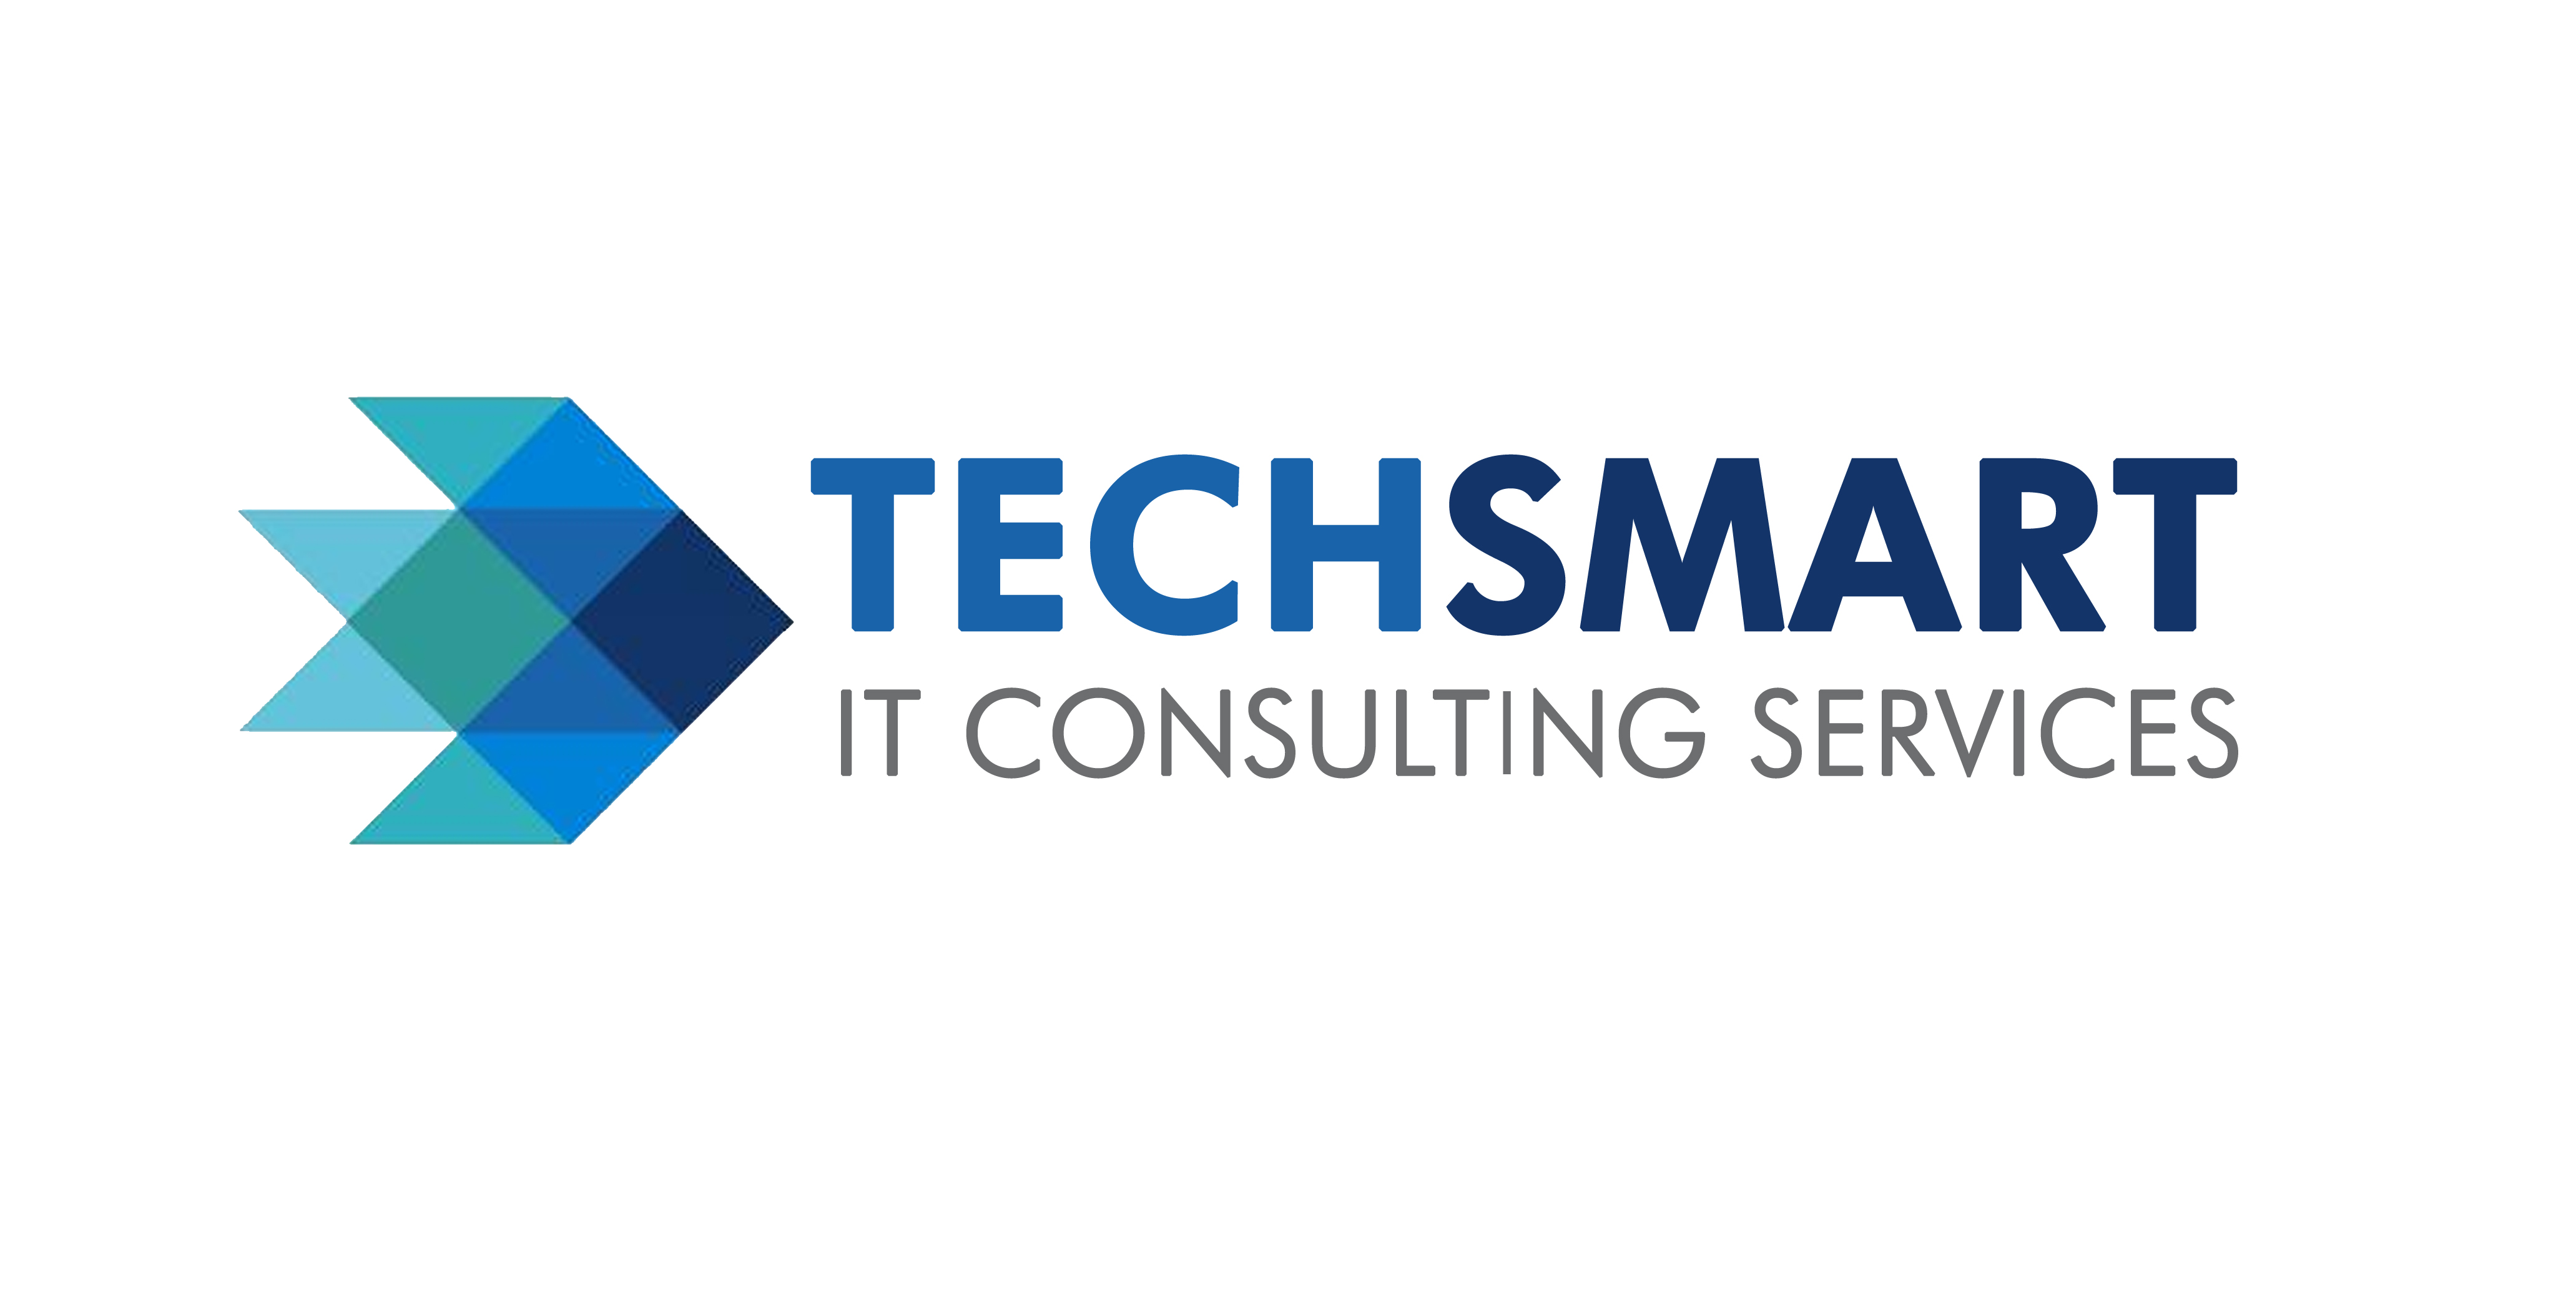 1601647343tech-smart-logo.jpg